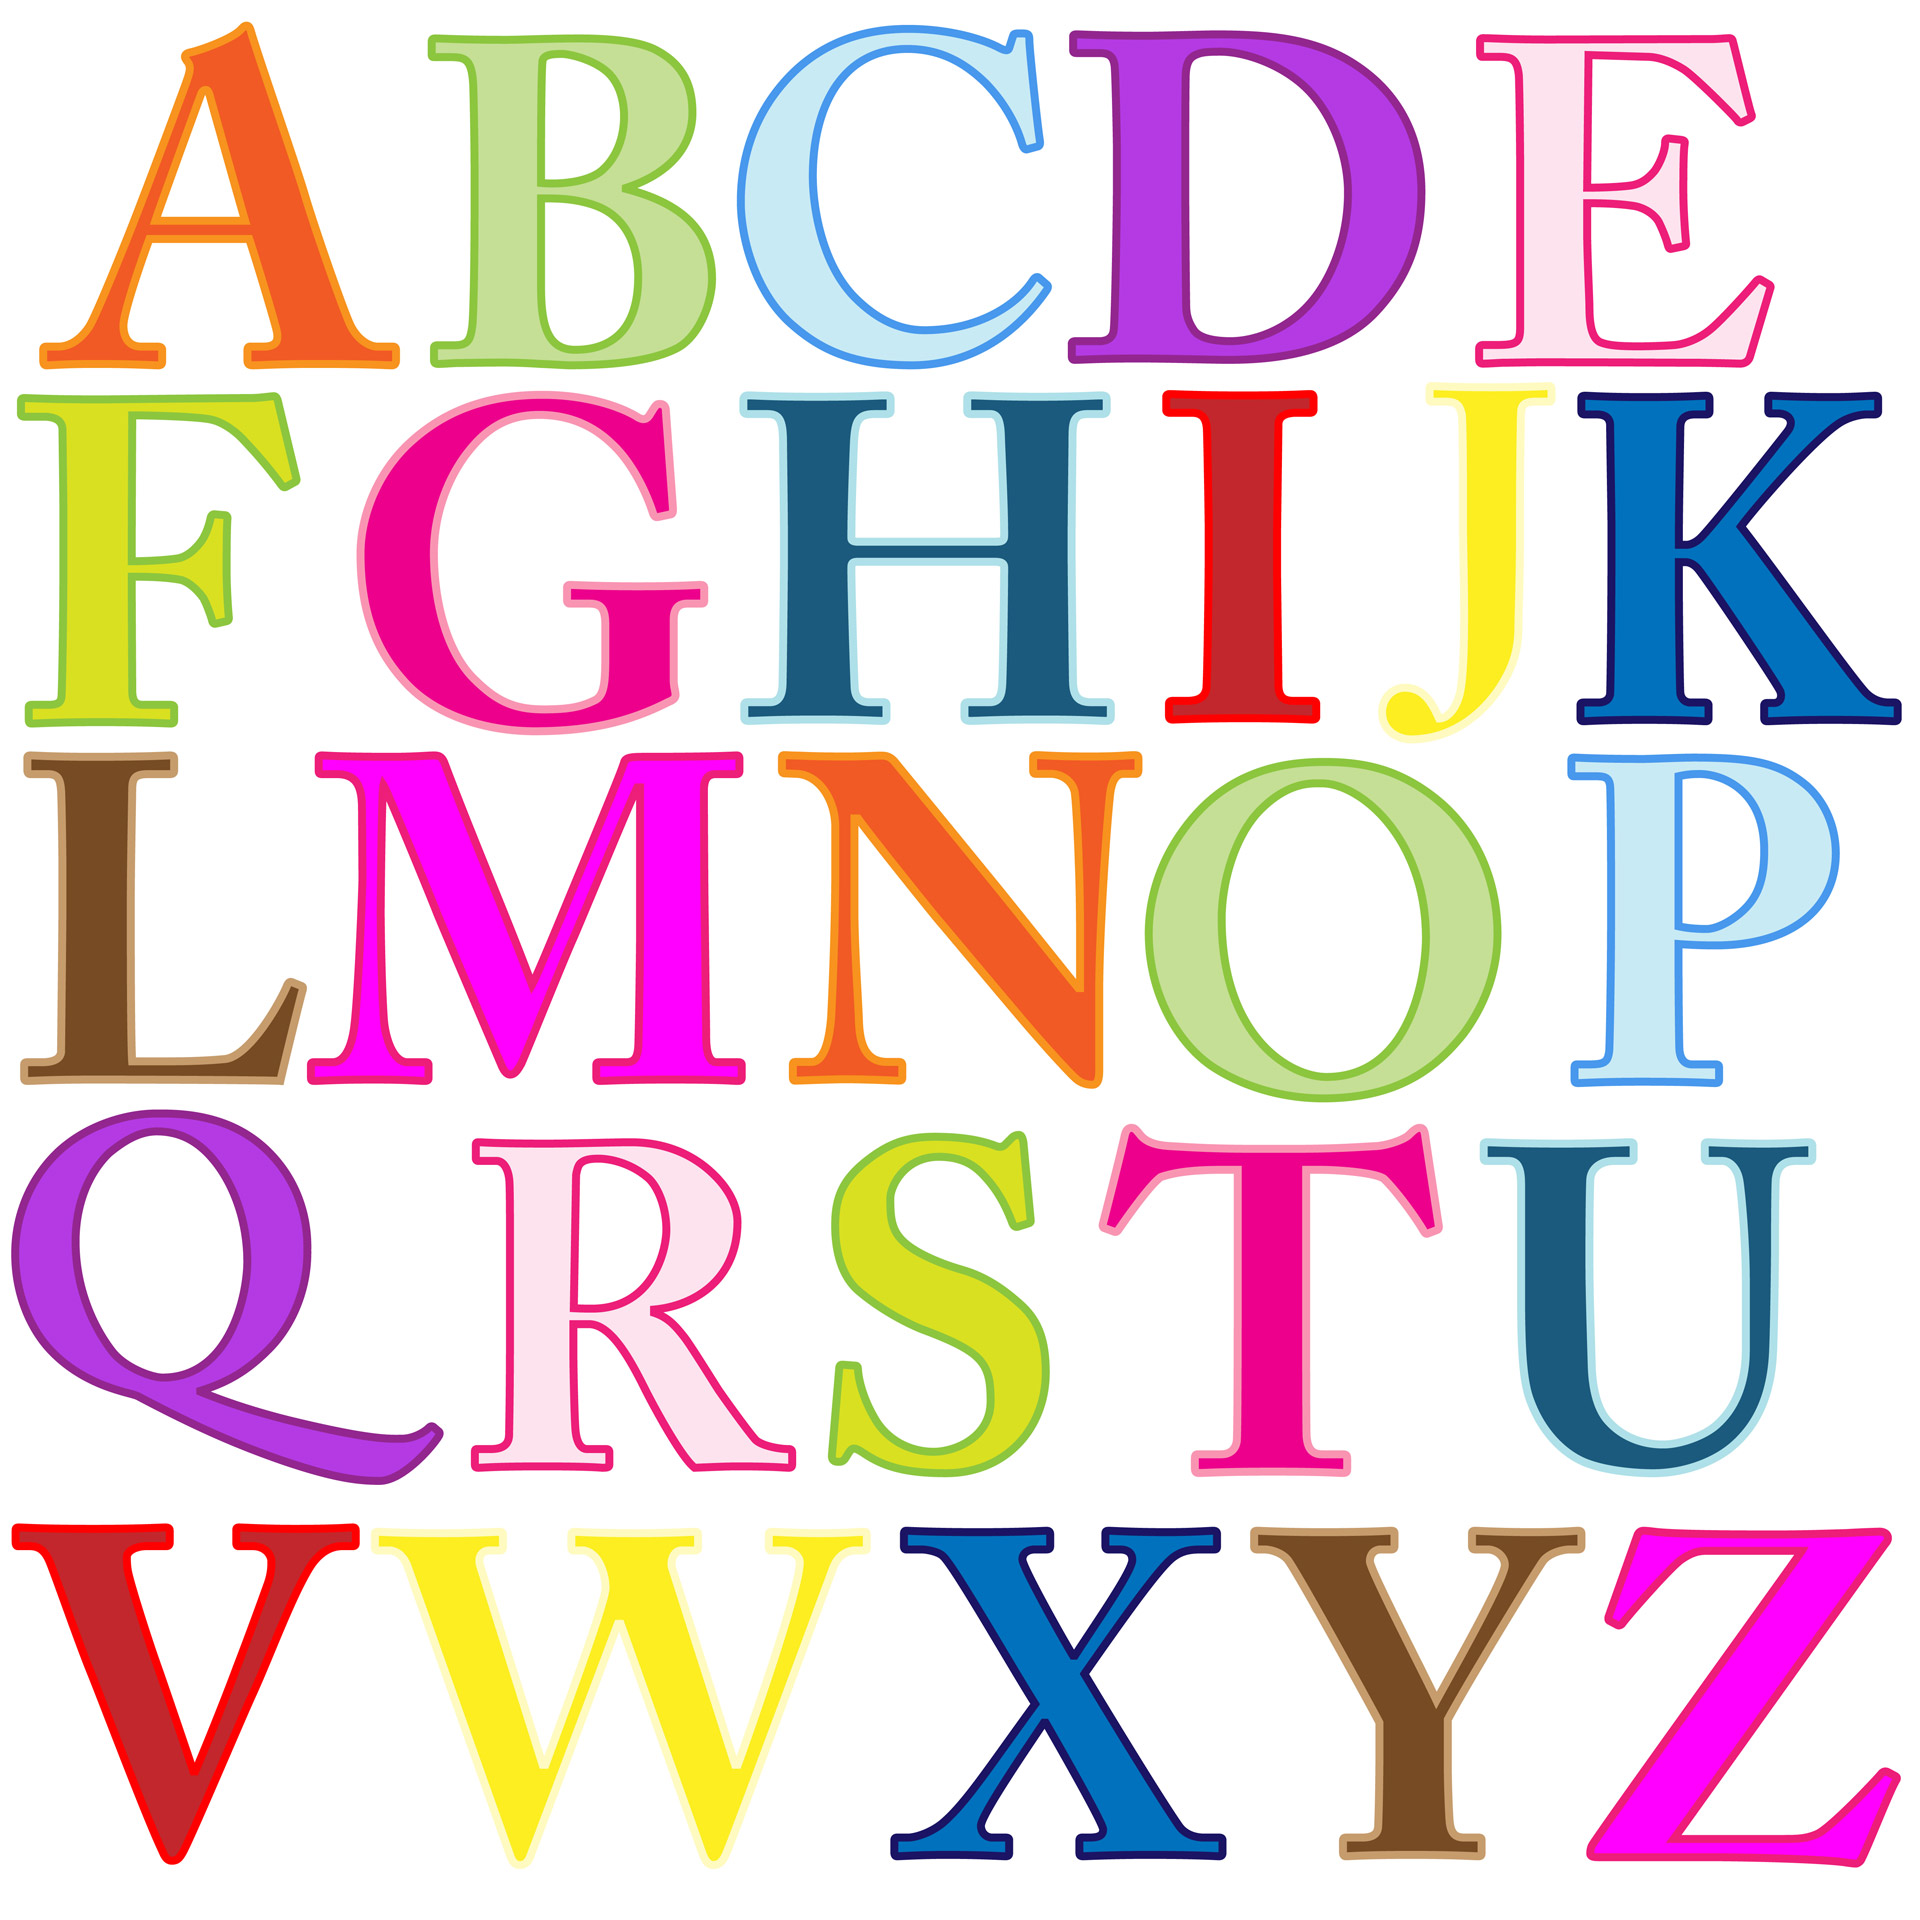 Alphabet Letters Colorful Free Stock Photo Public Domain Pictures